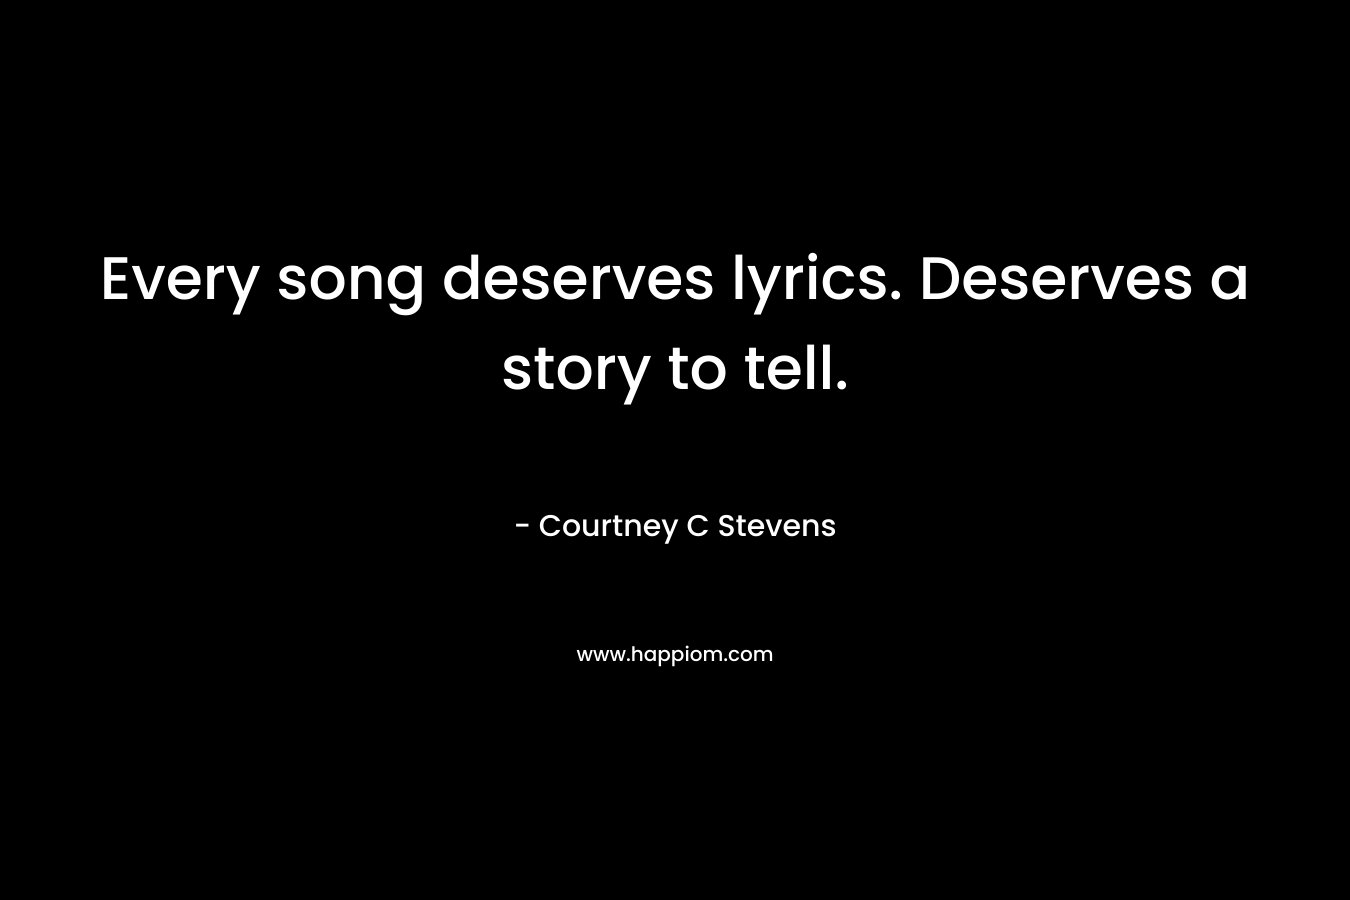 Every song deserves lyrics. Deserves a story to tell.